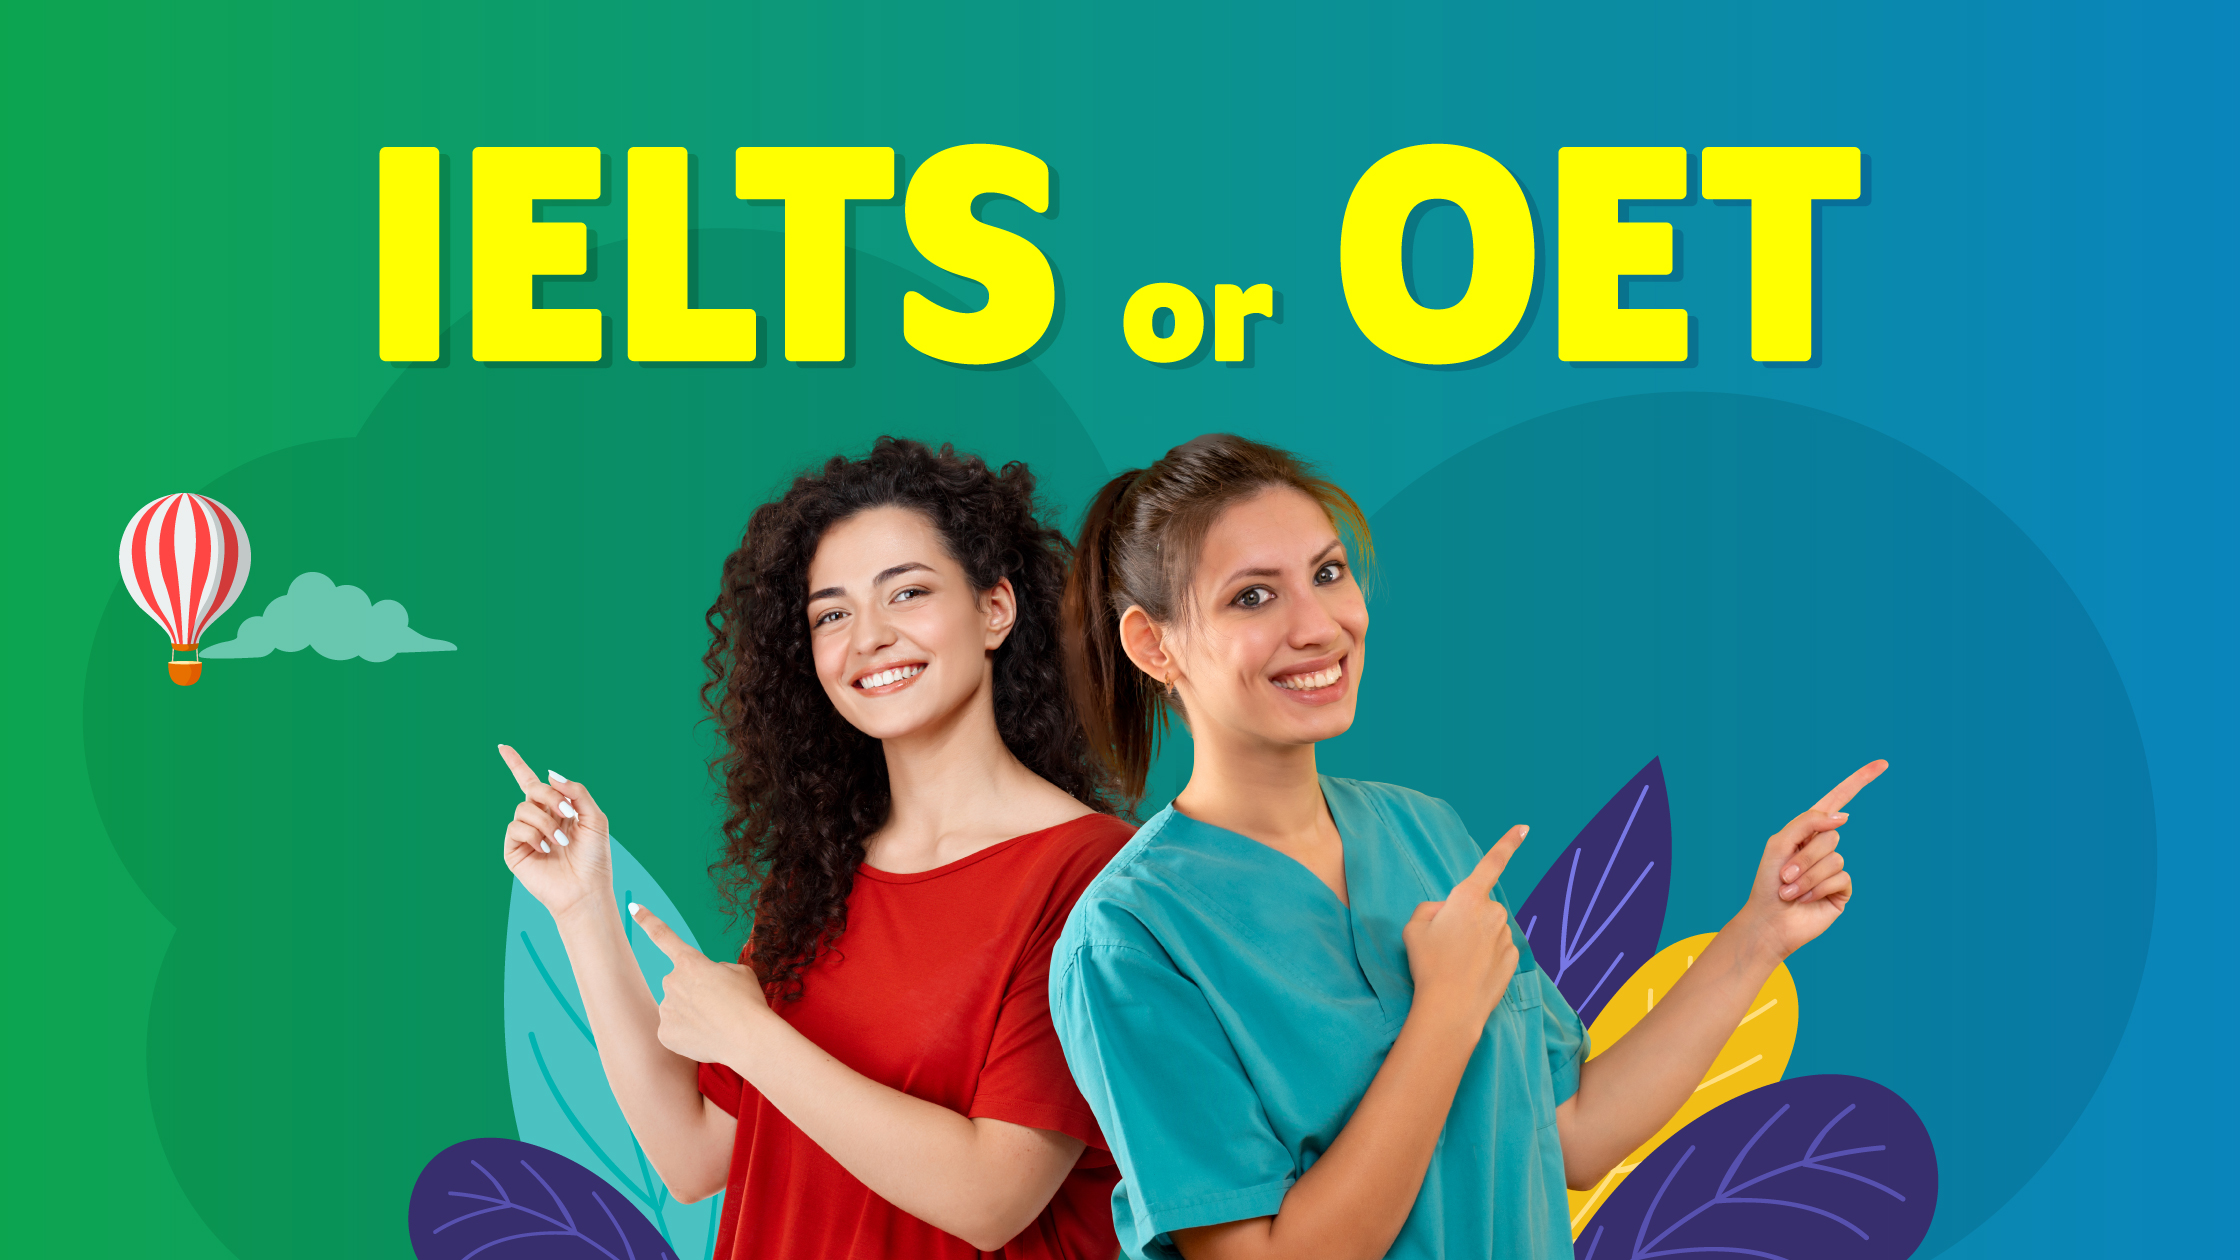 IELTS or OET- Which Test Should Nursing Professionals Take